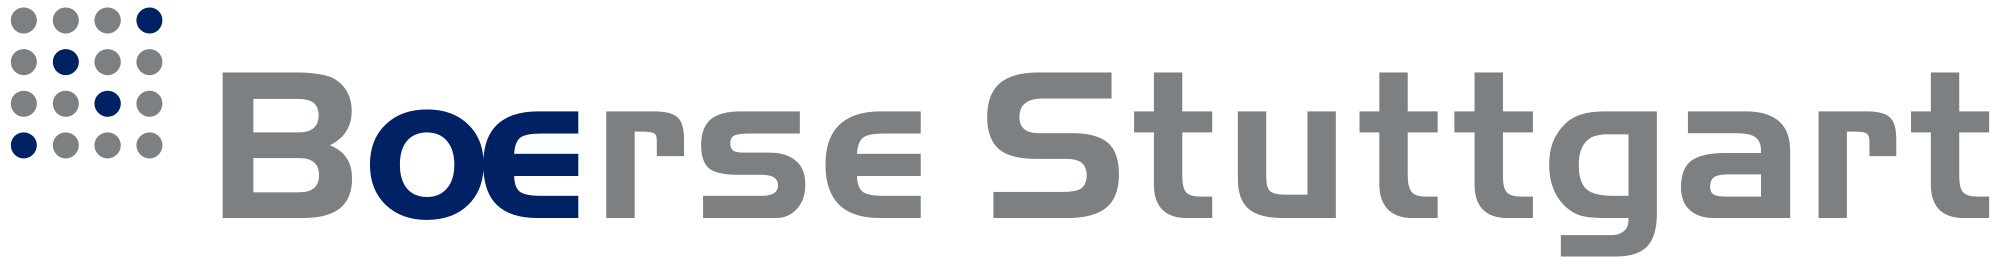 Boerse Stuttgart Logo